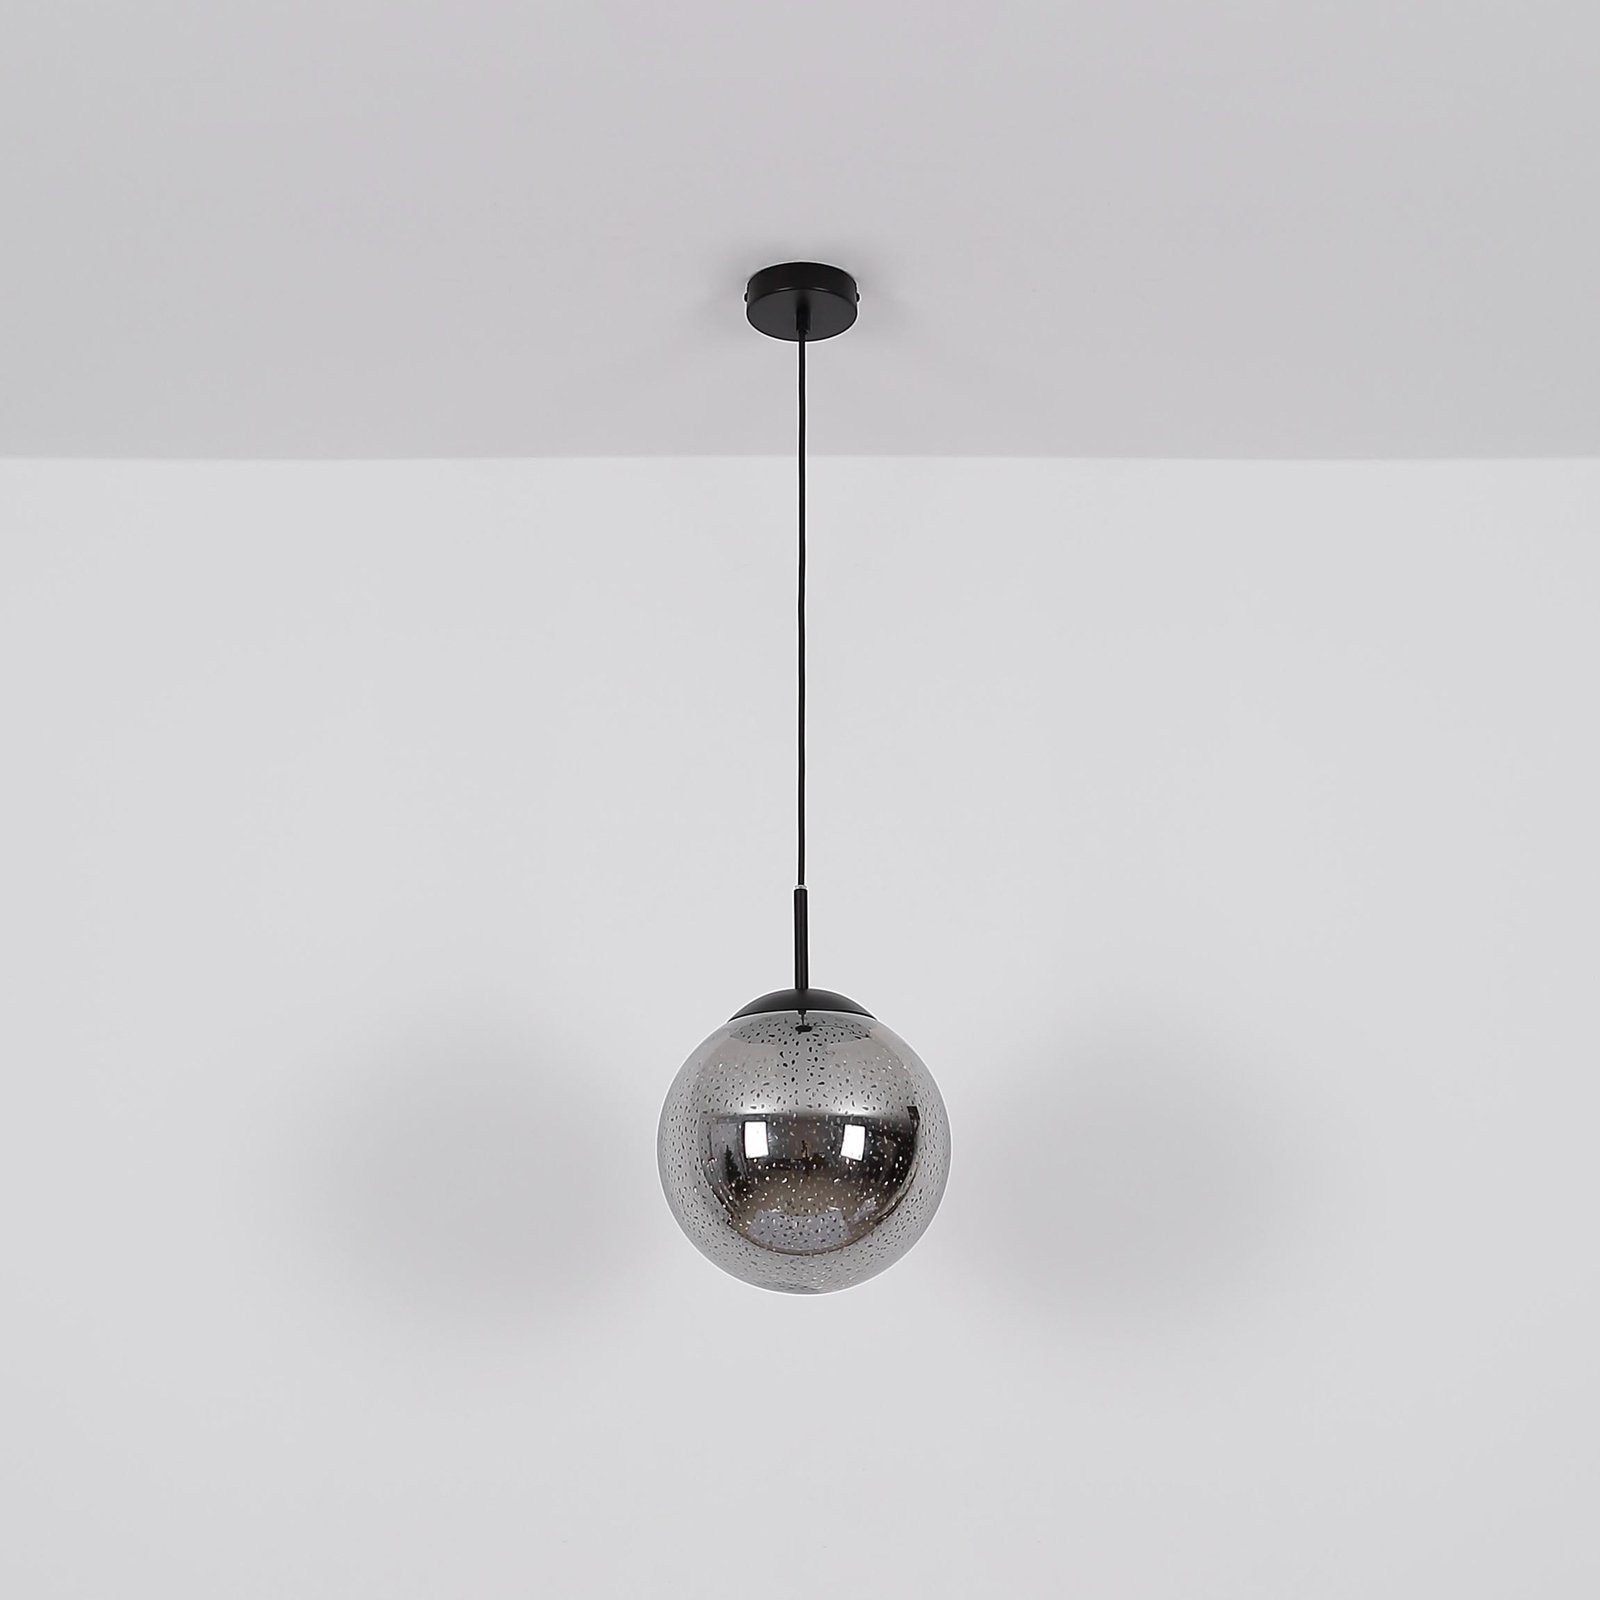 Hanglamp Samos, Ø 25 cm, rookgrijs/zwart, glas